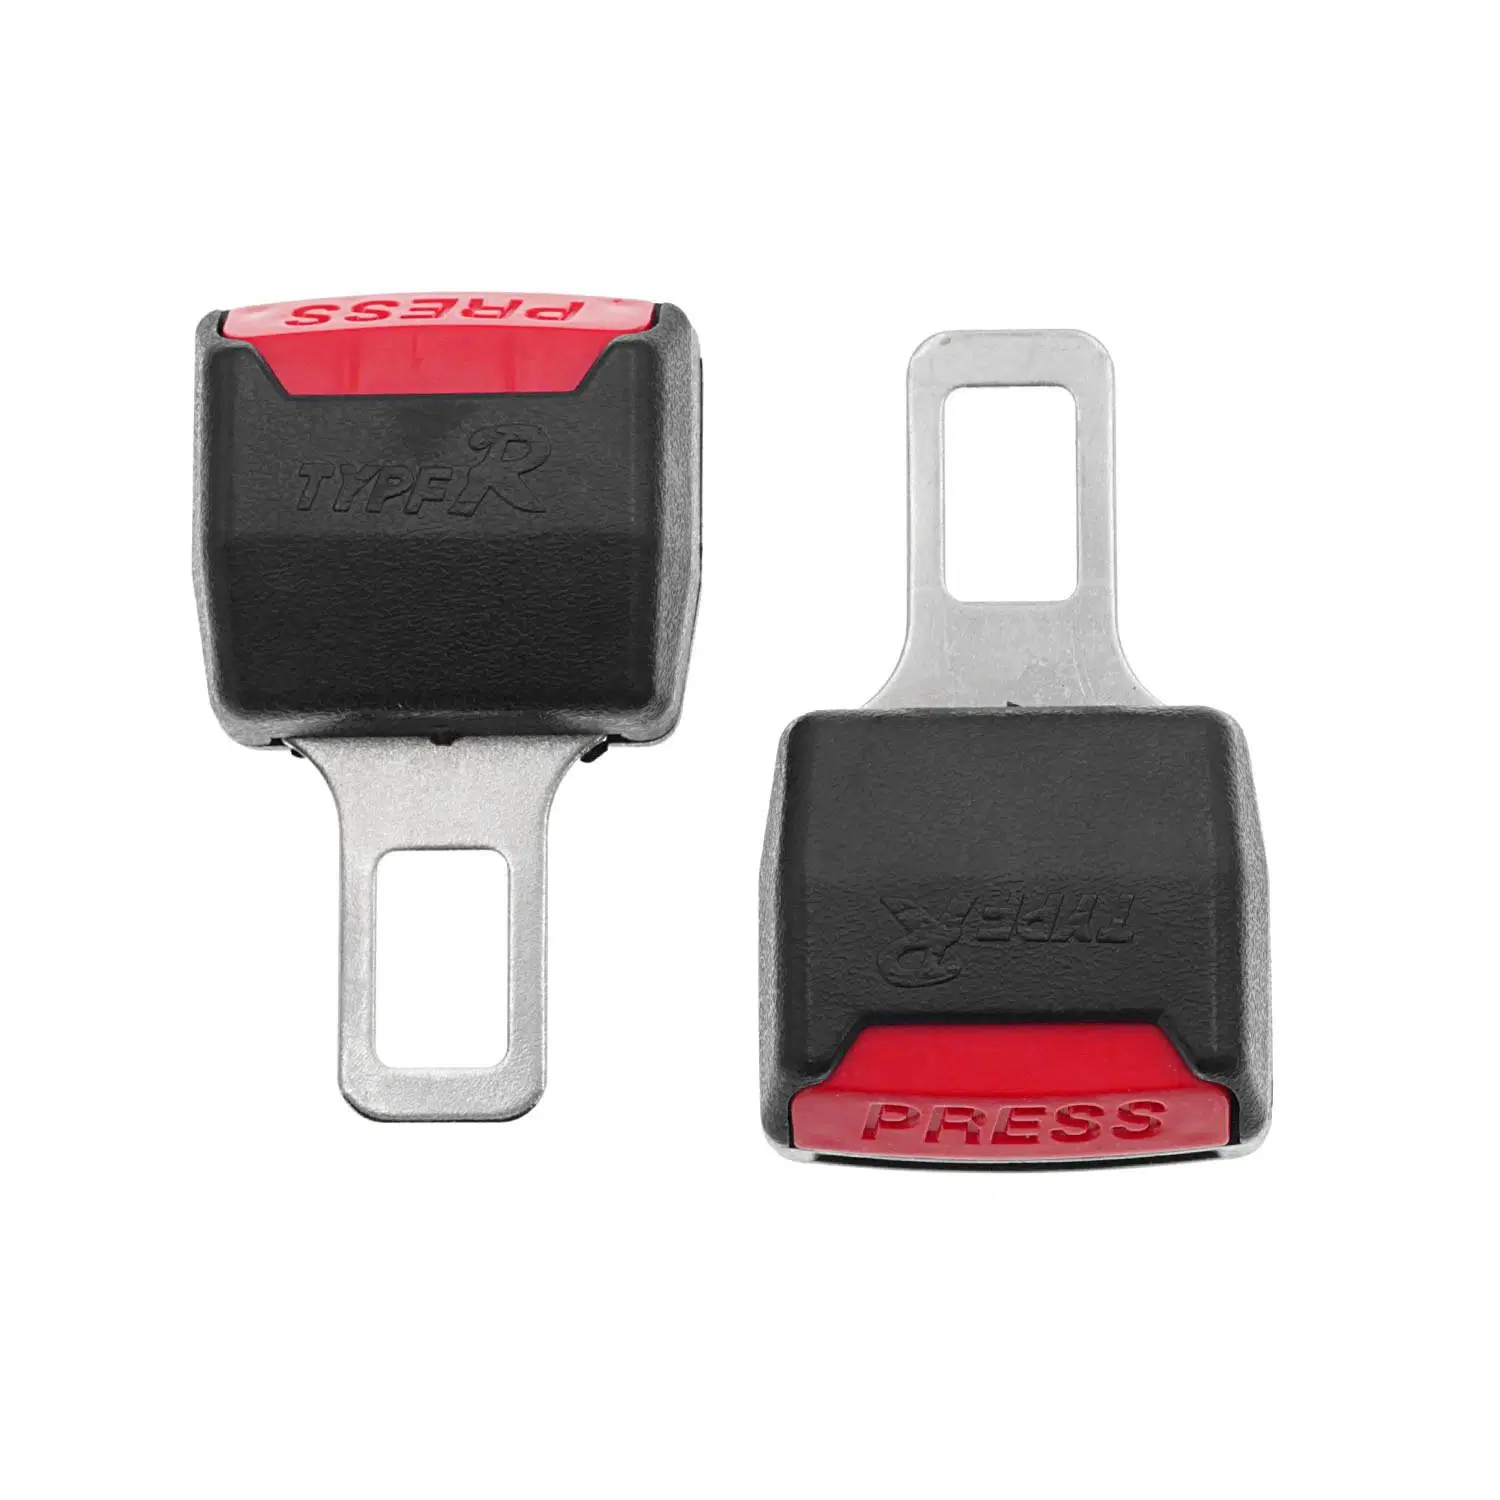 New Hot Sale Universal Car Safety Seat Belt Buckle Car Seat Belt Clip Extension Plug Seatbelt Lock Buckle Extender Accessories